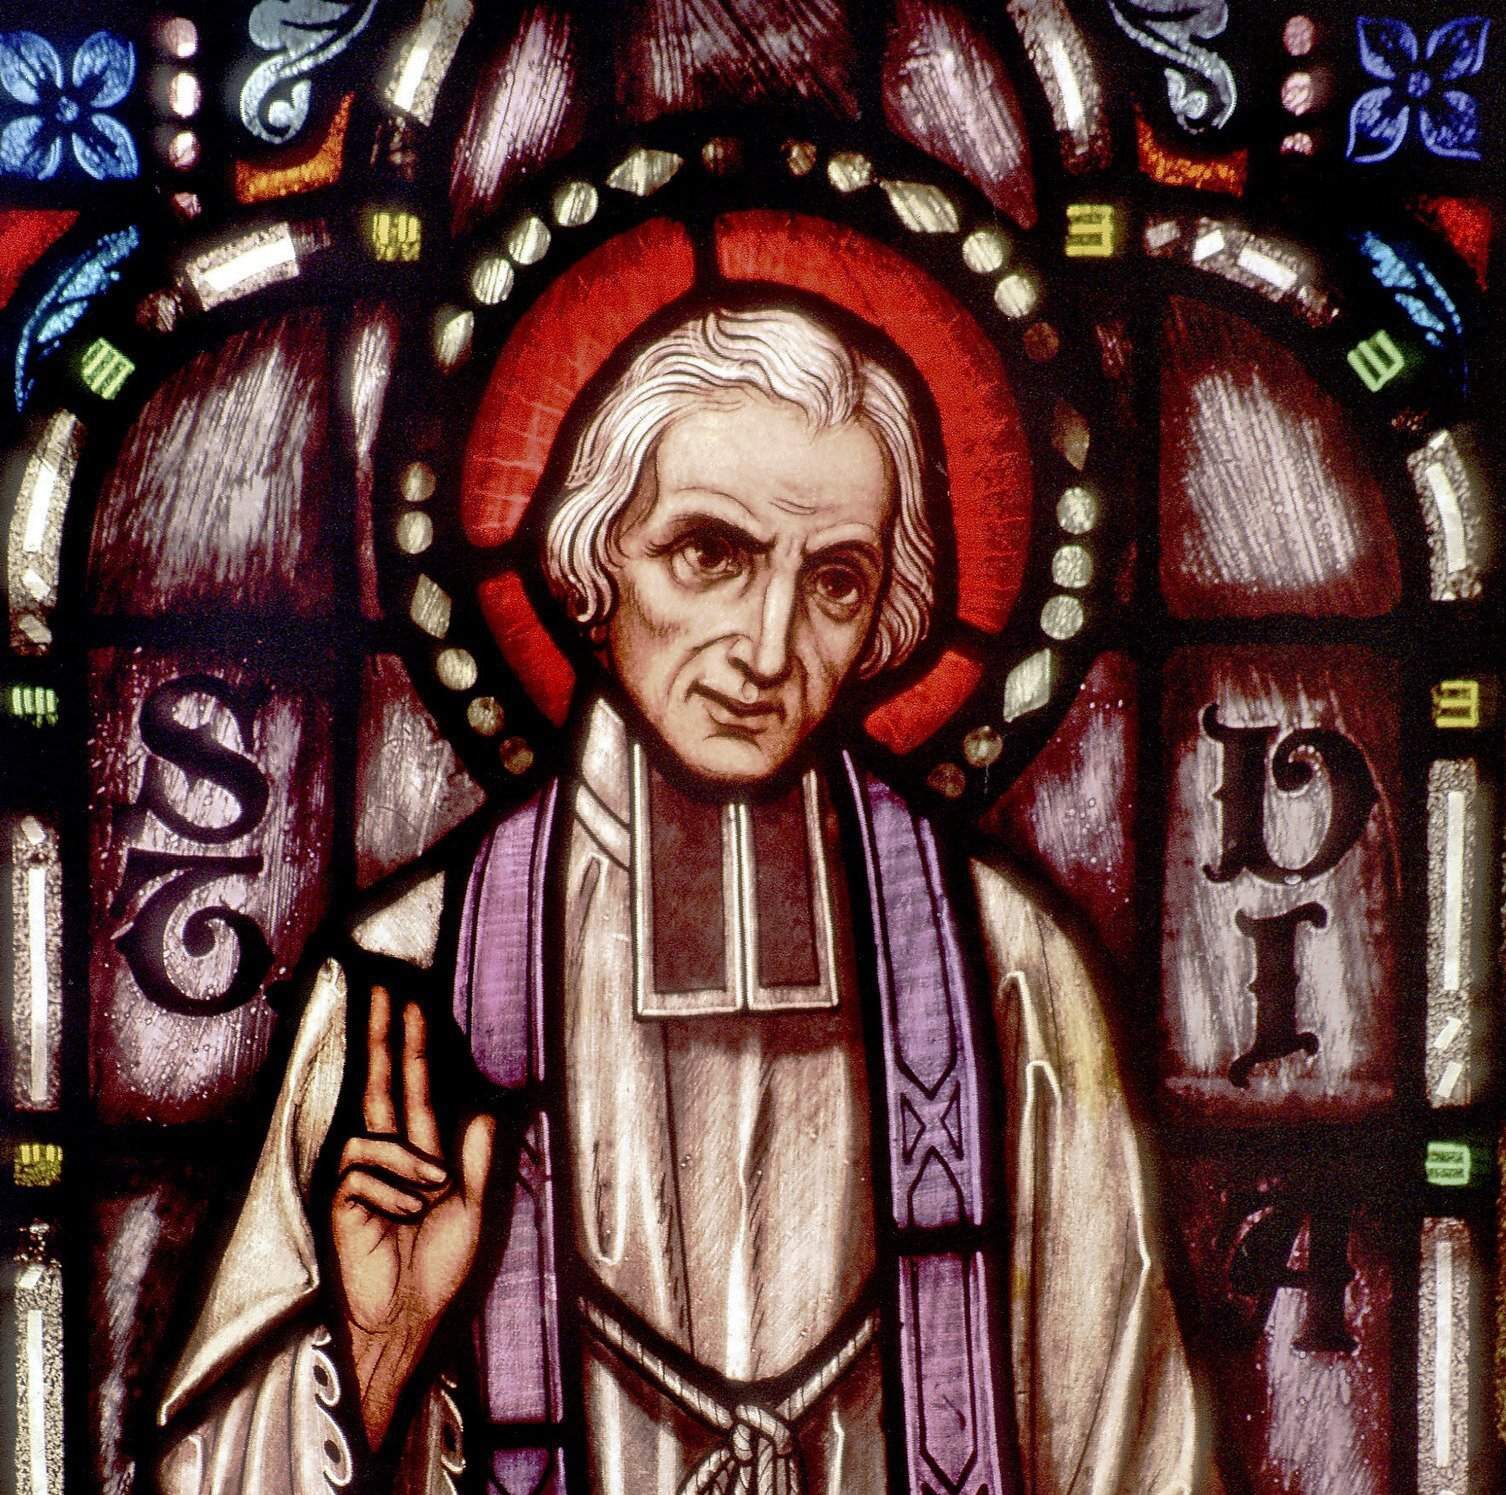 About Saint John Vianney The Catholic Echo